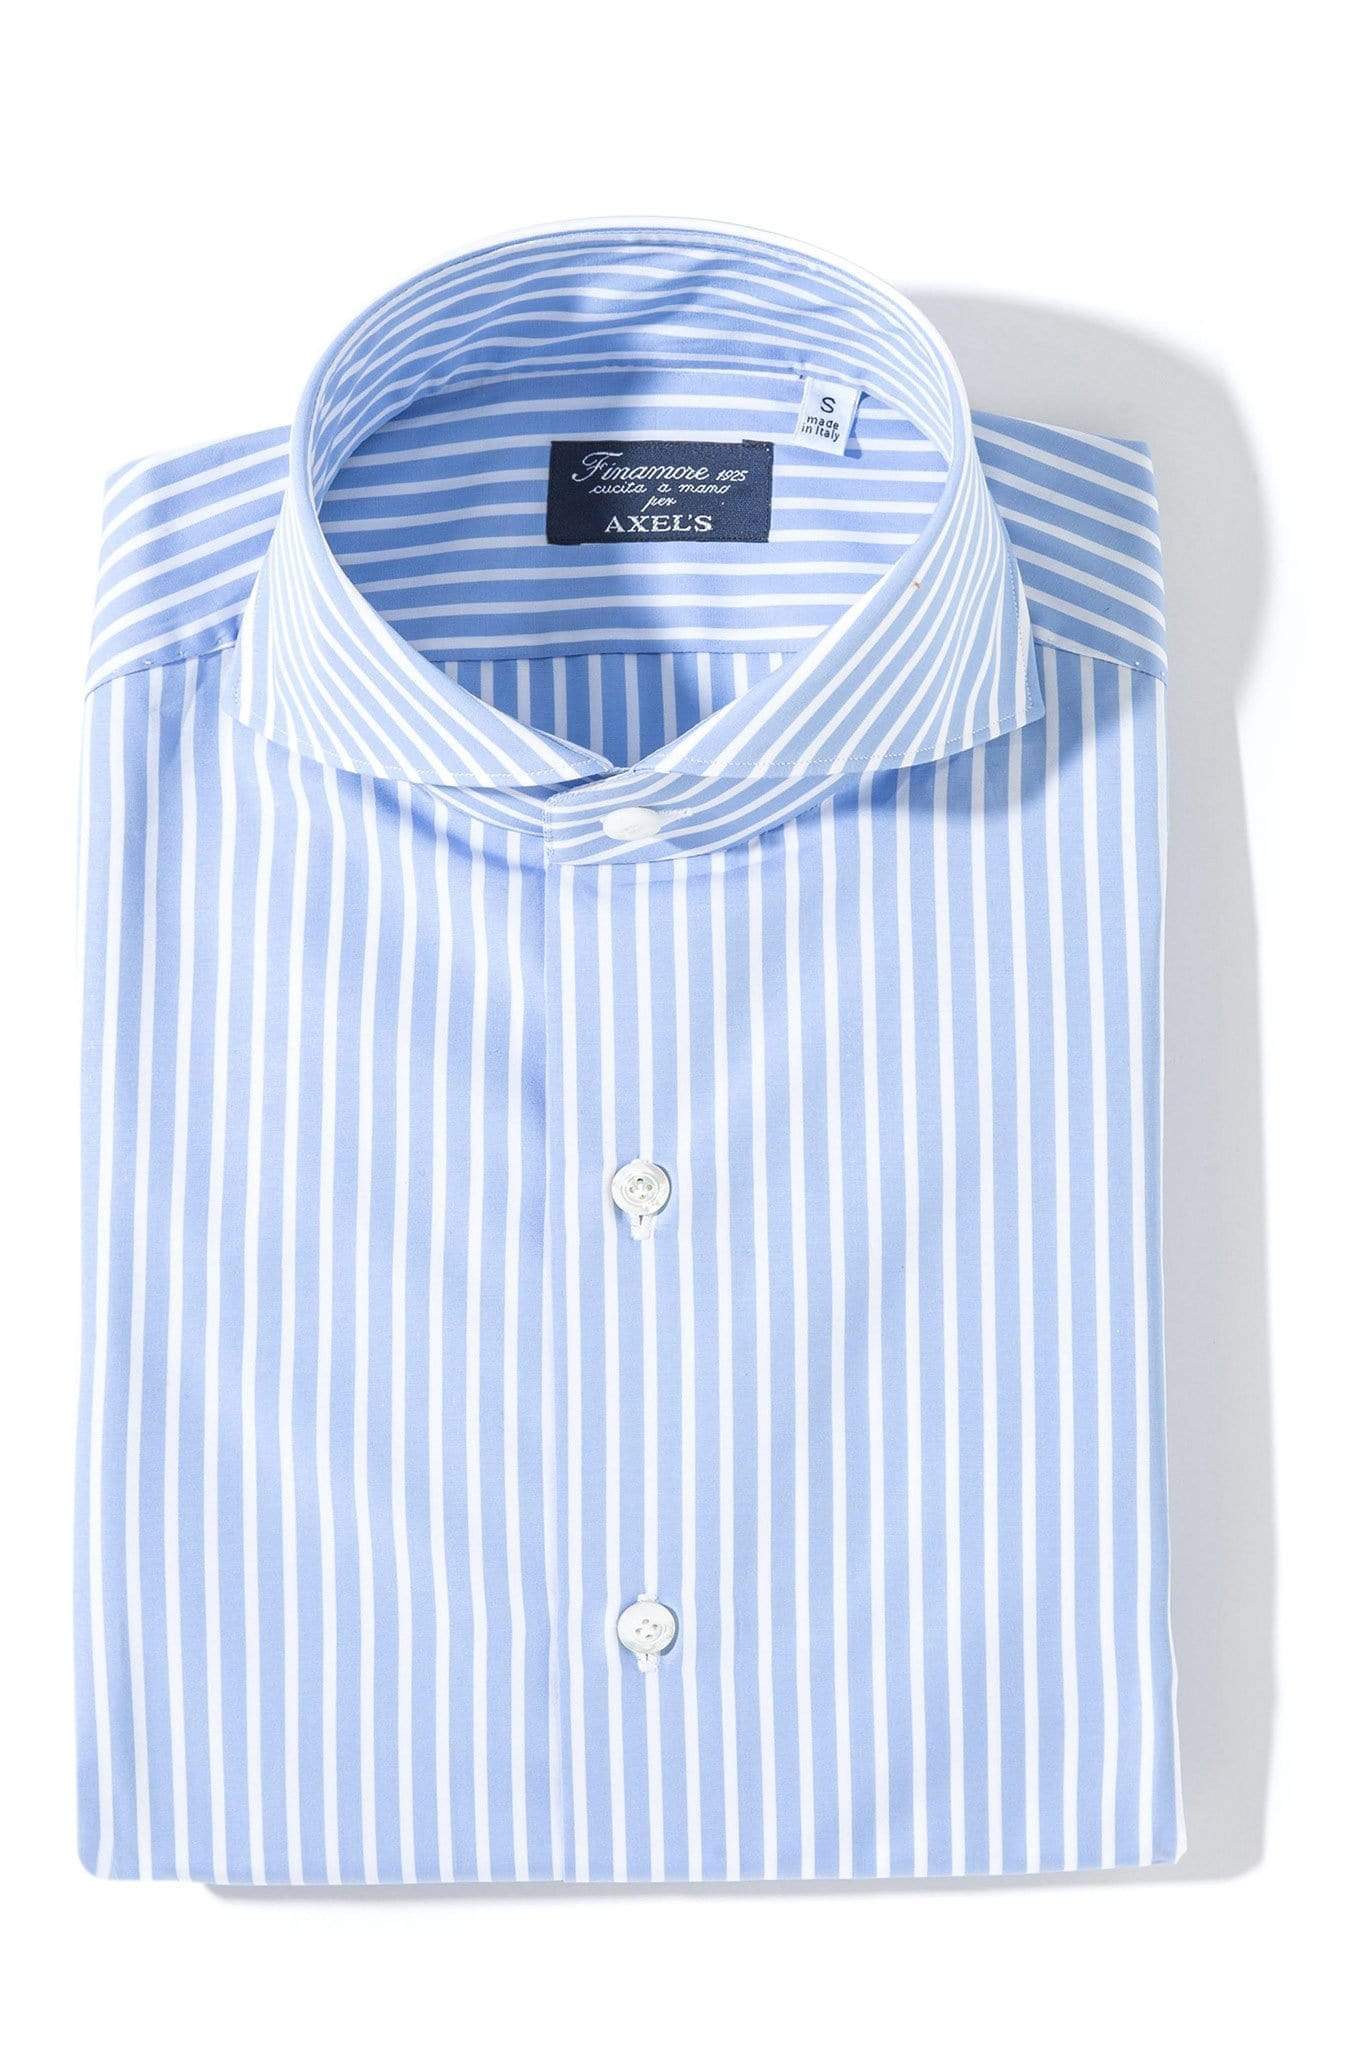 Florence Stripe Dress Shirt in Light Blue - AXEL'S